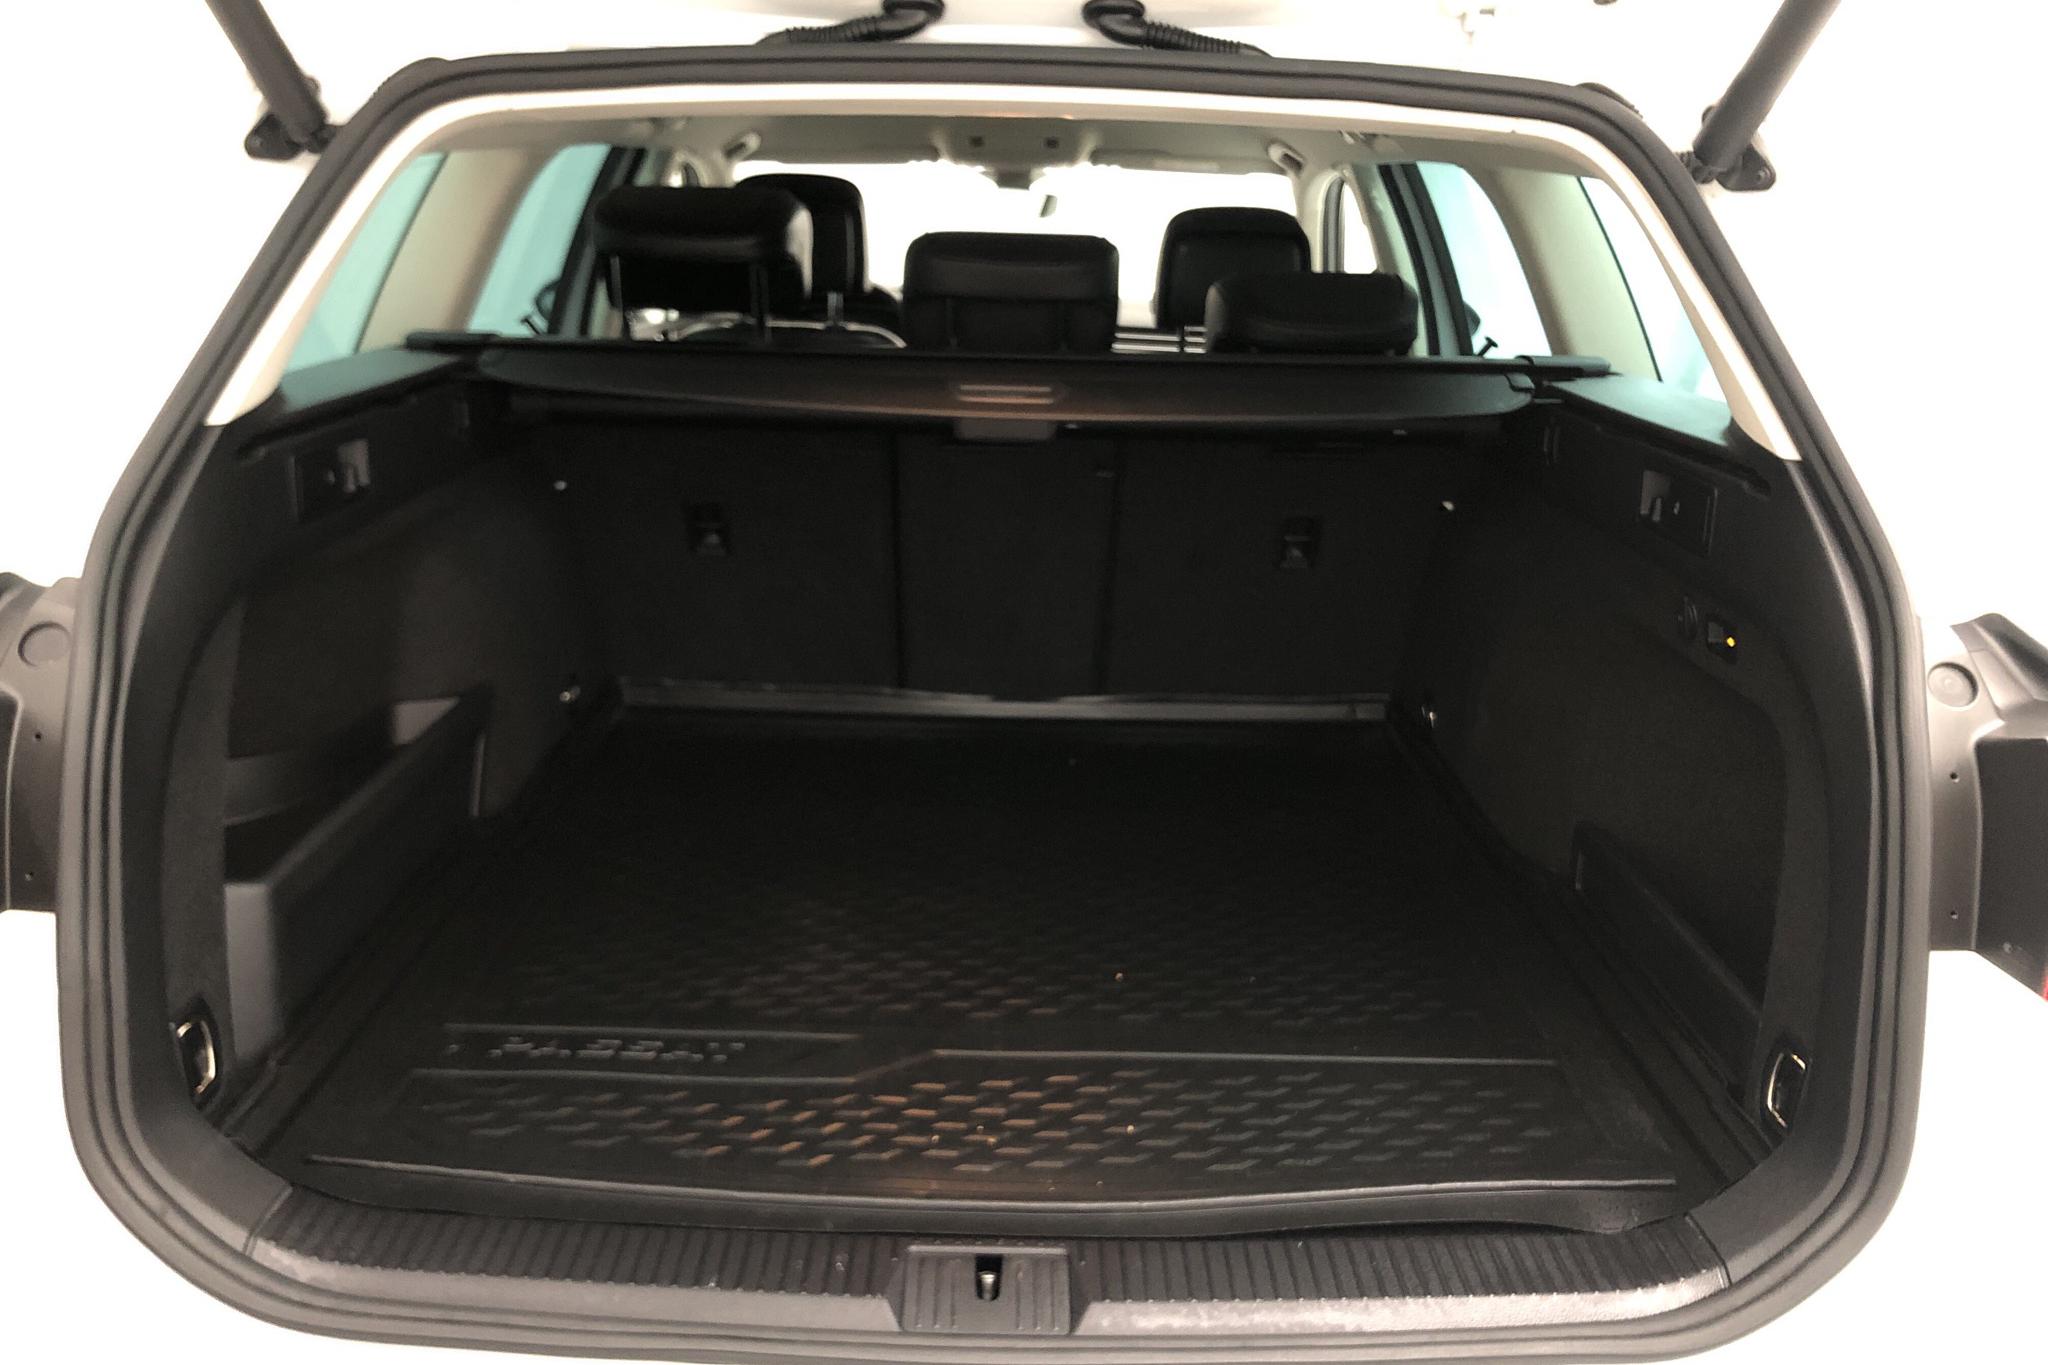 VW Passat Alltrack 2.0 TDI Sportscombi 4MOTION (190hk) - 7 200 mil - Automat - vit - 2018